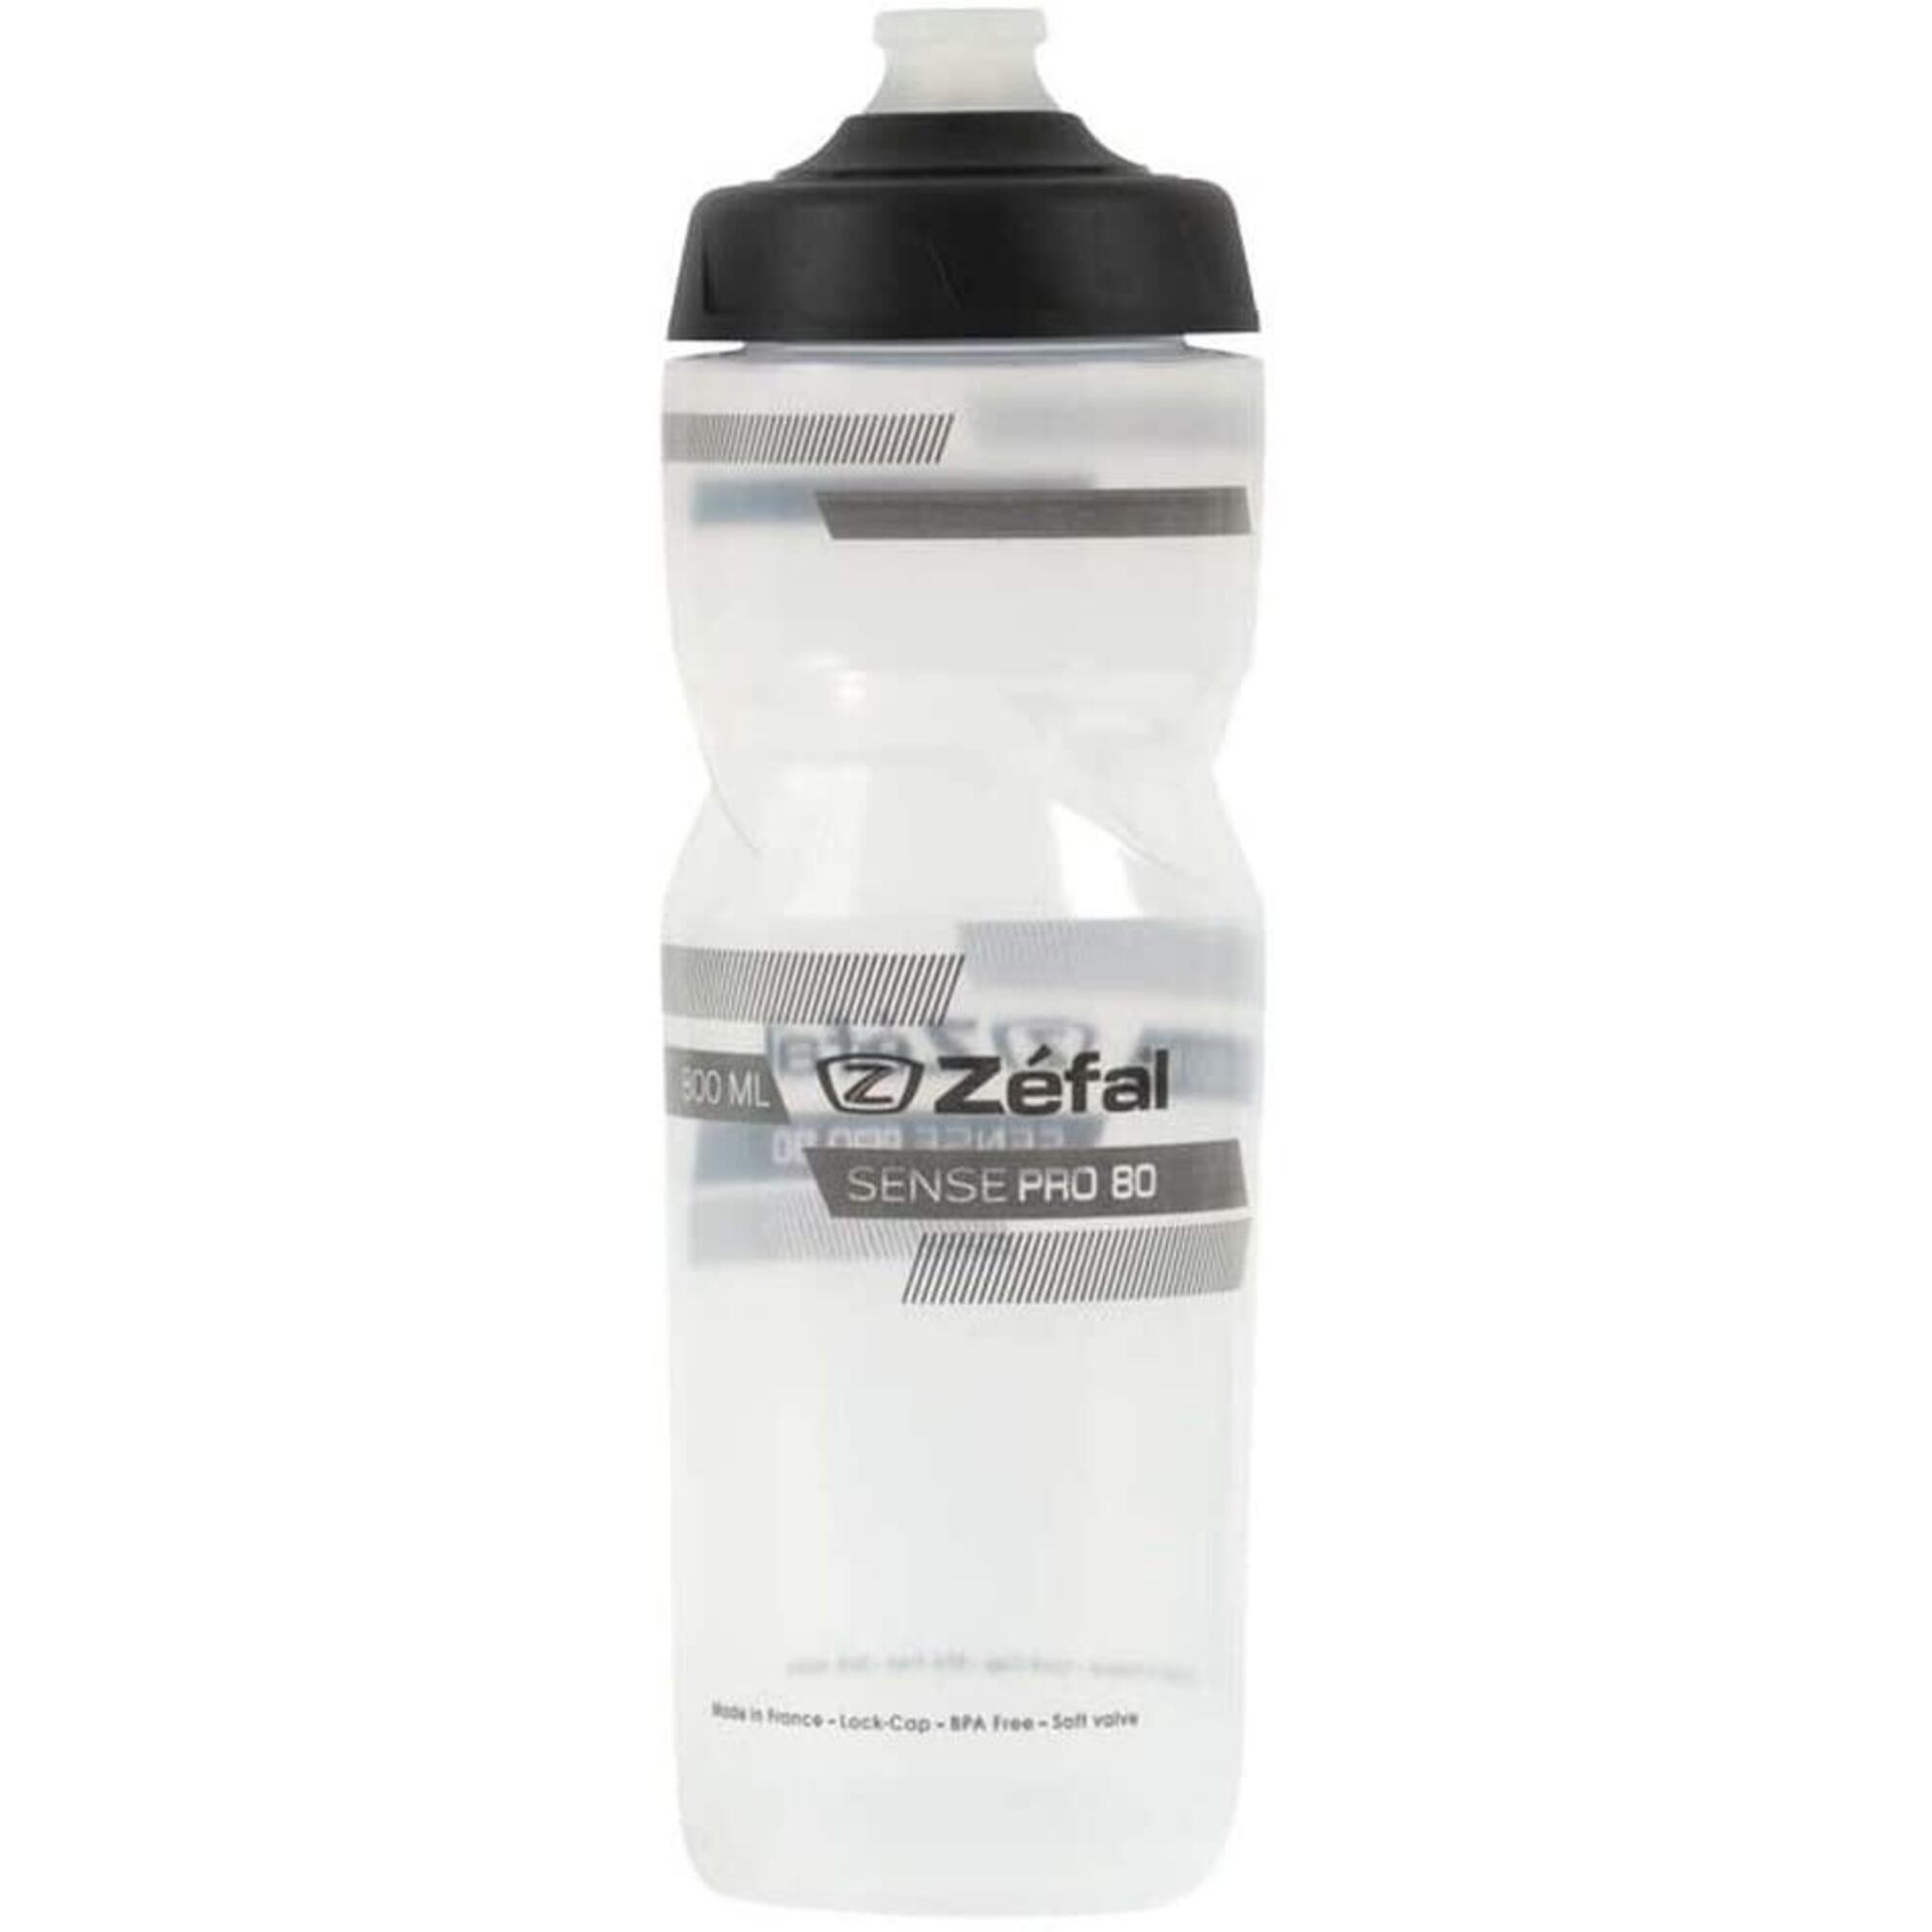 Zefal Sense Pro 80 Water Bottle - Translucent 1/3